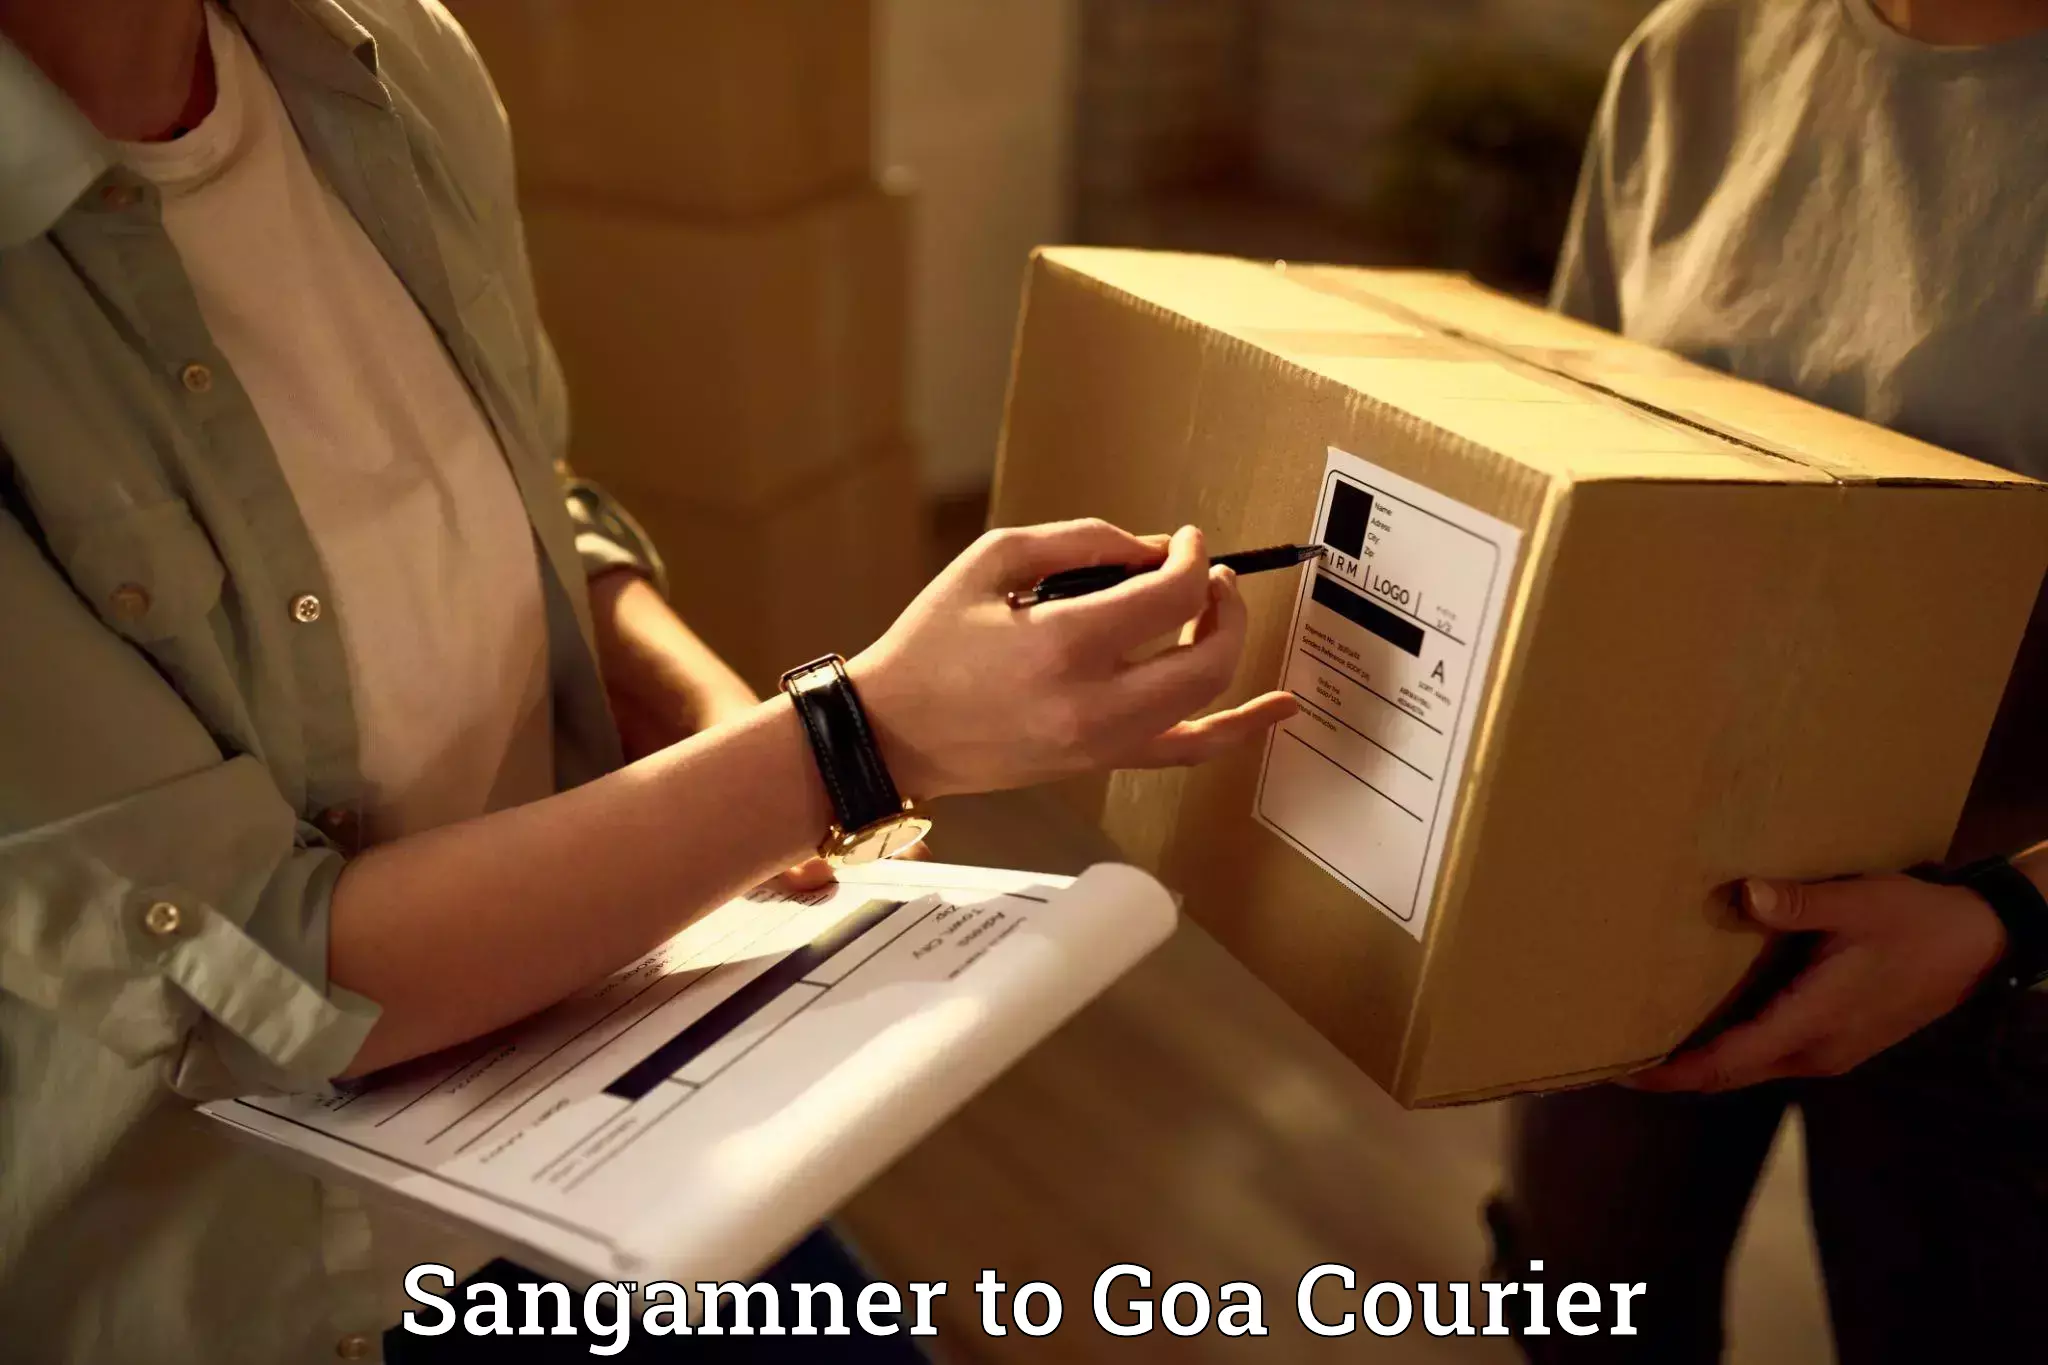 Furniture delivery service Sangamner to Goa